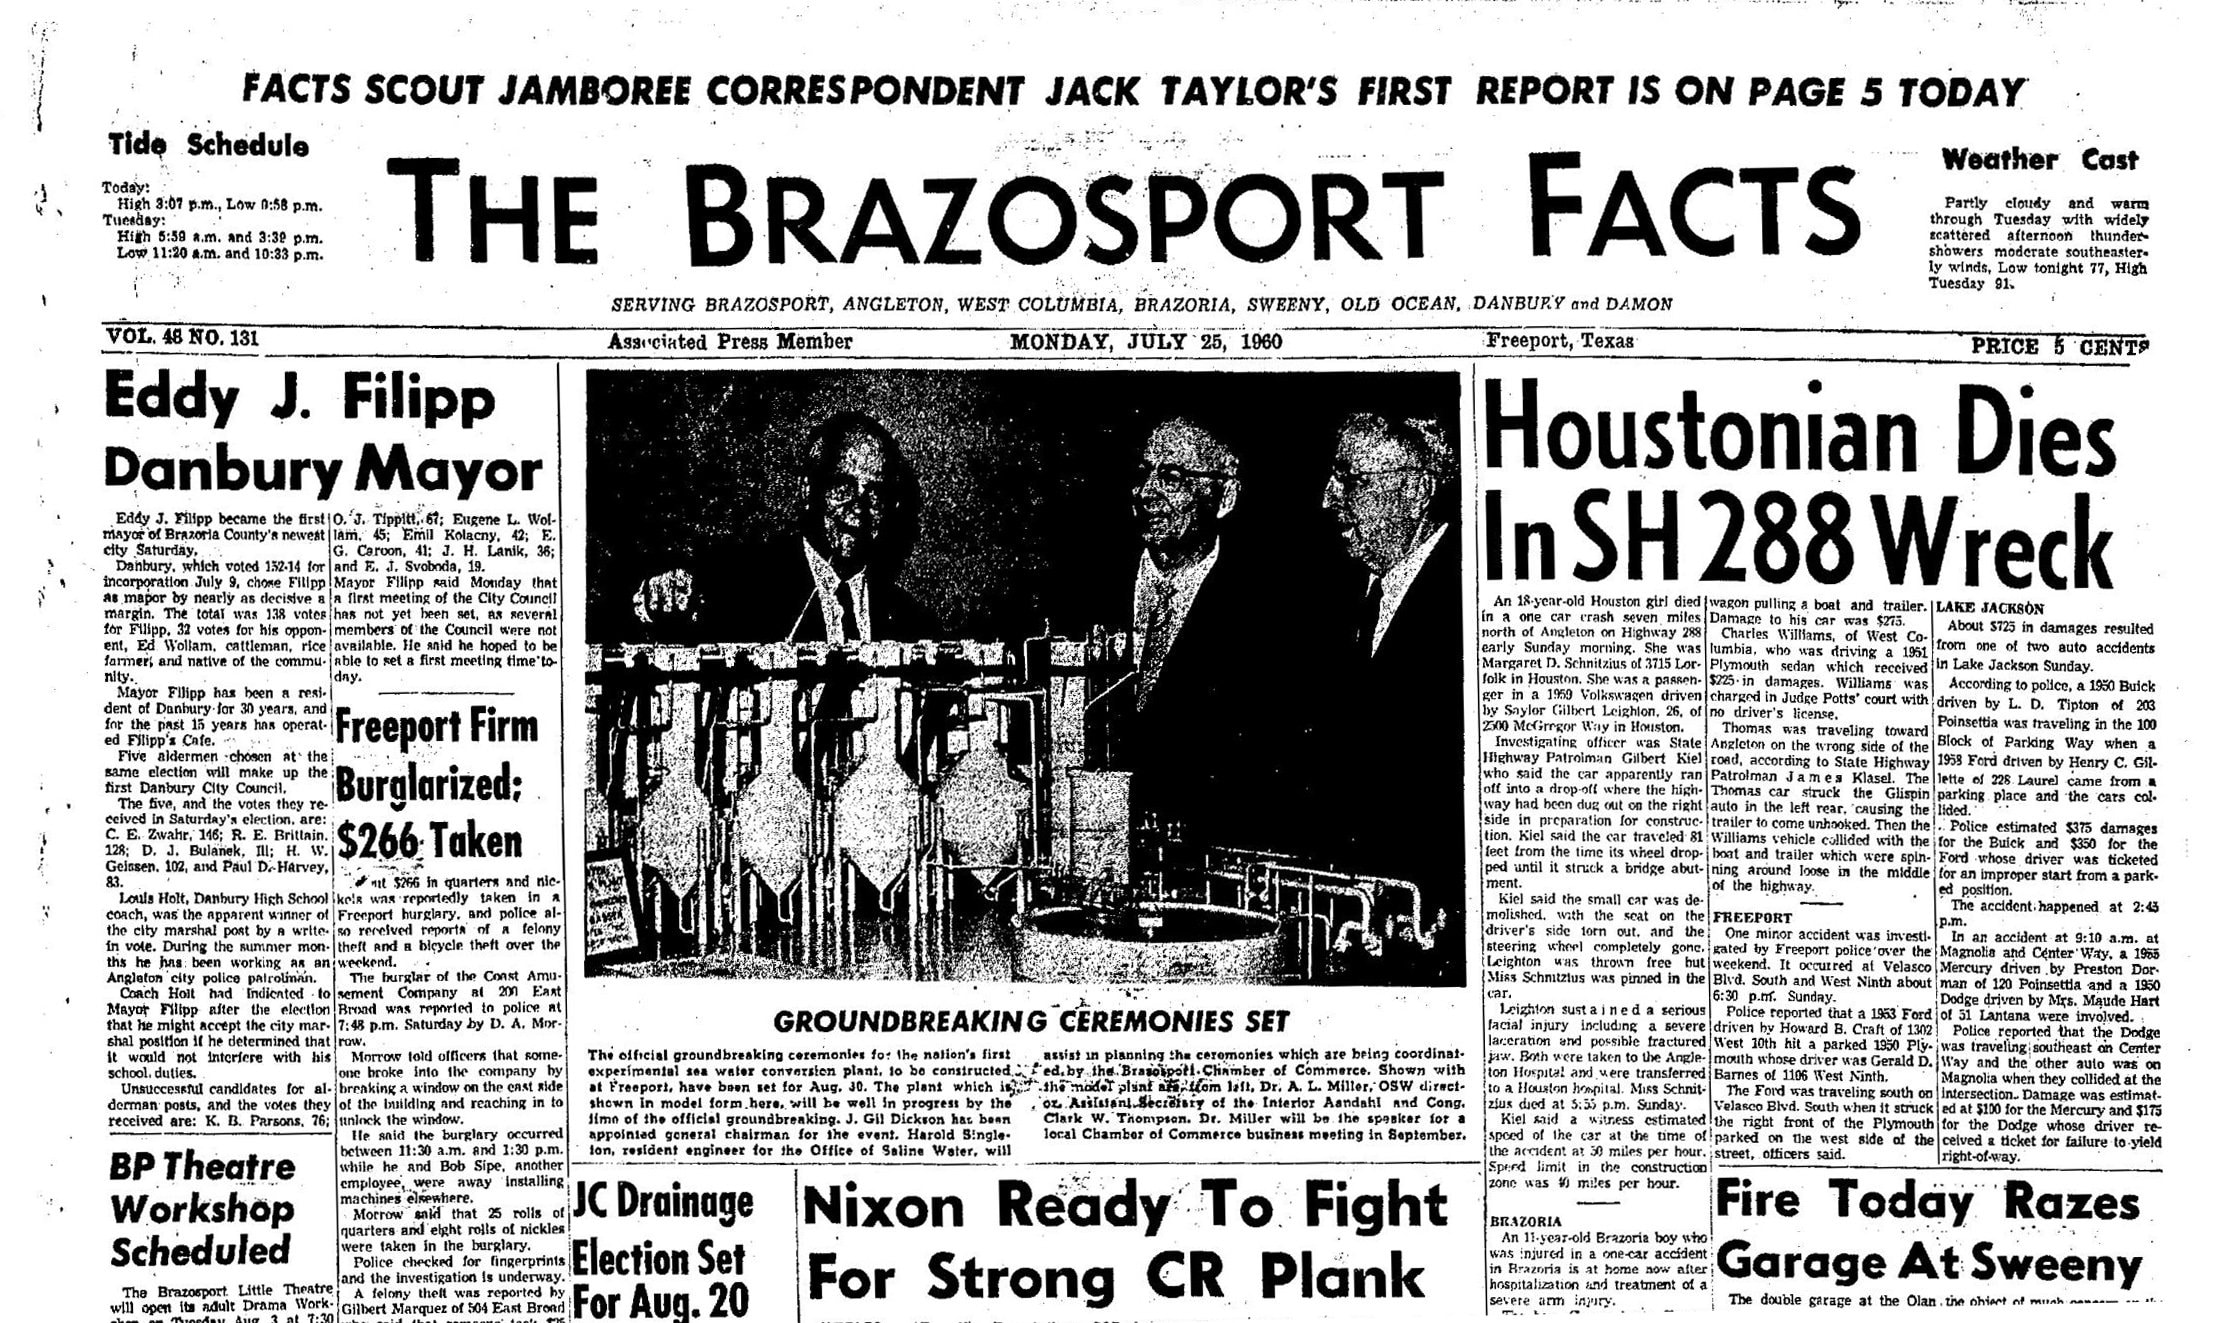 Texas Freeport Brazosport Facts Jul 25 1960 p 1 1 - Filipp's Cafe